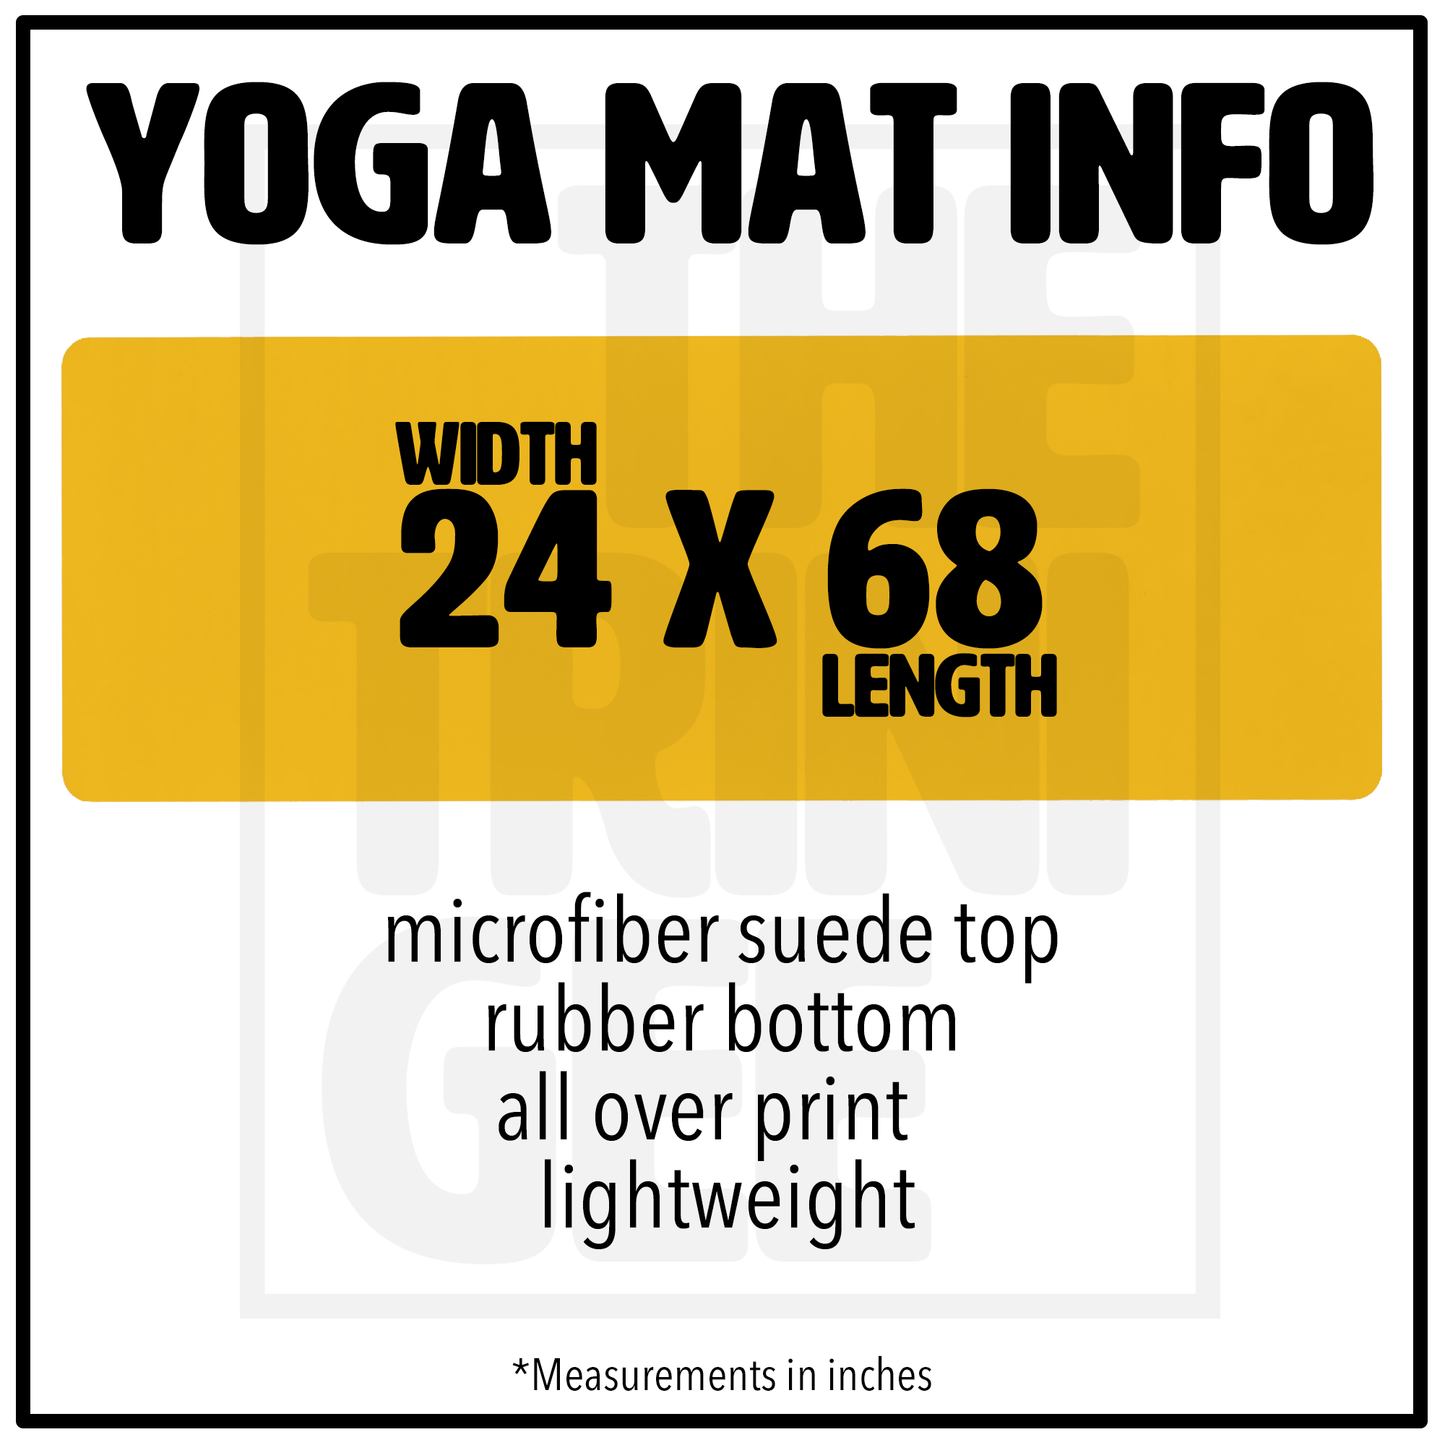 Stretch & Pose Yoga Mat